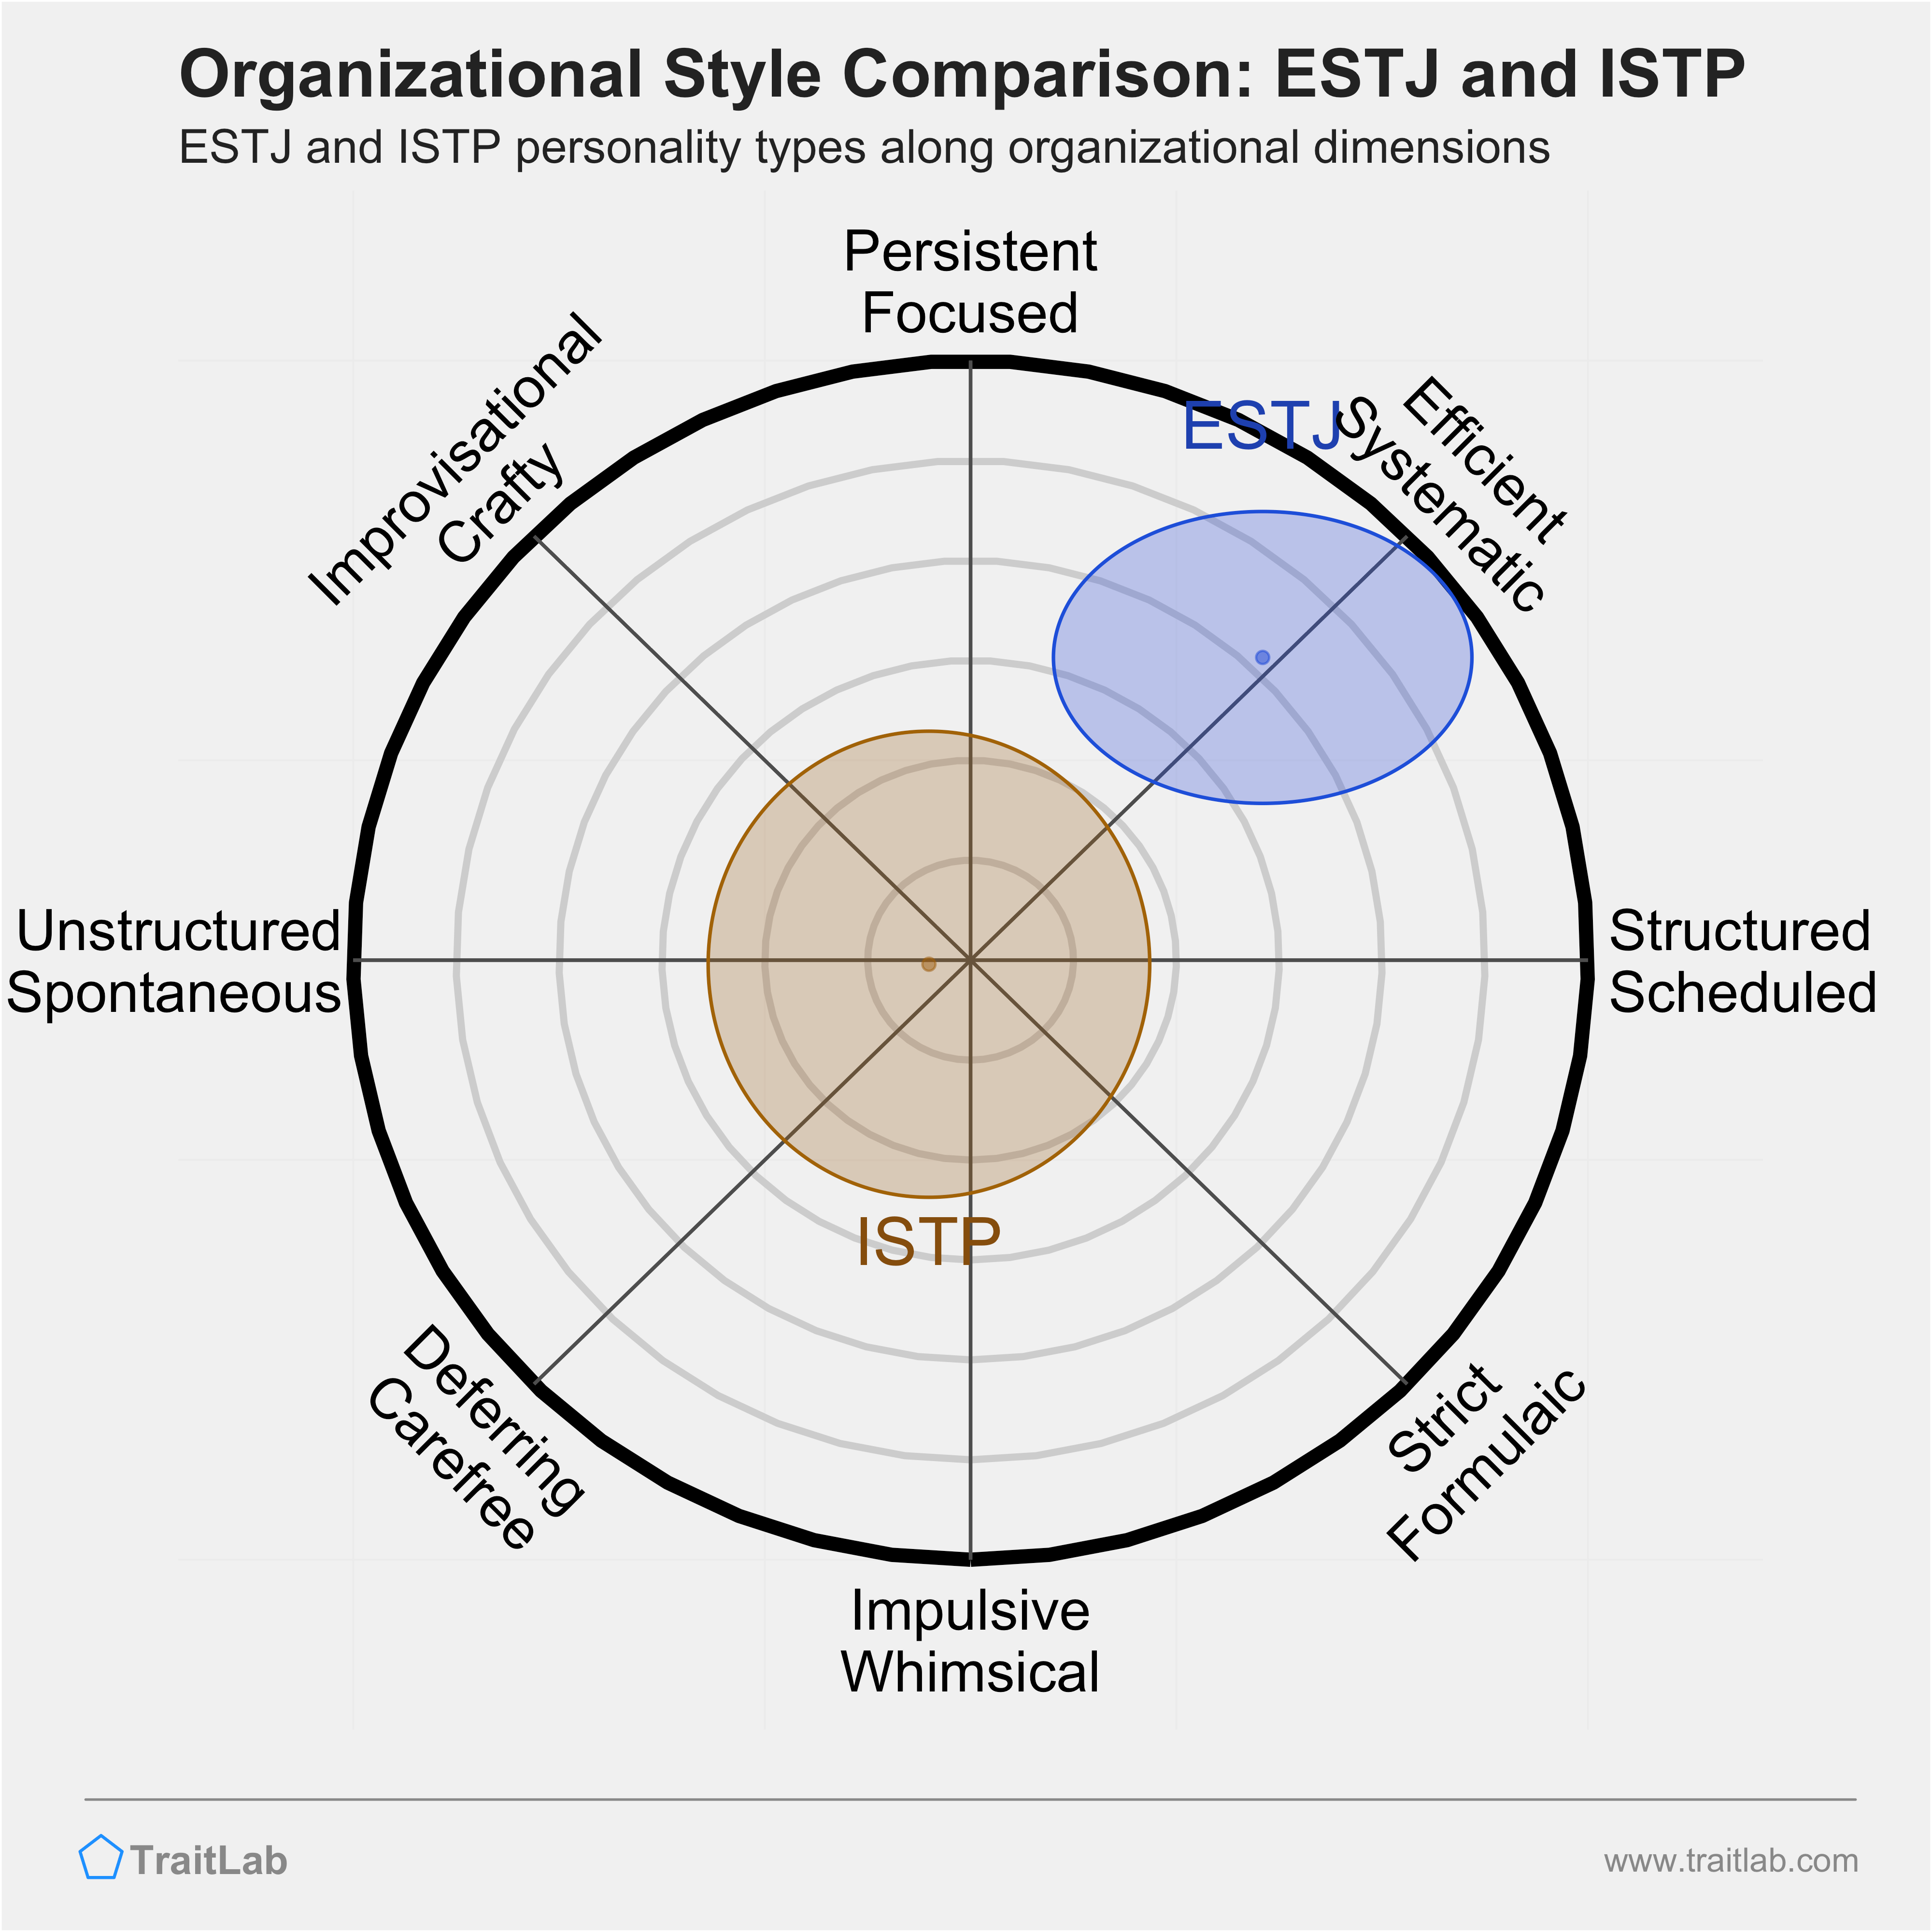 ESTJ and ISTP comparison across organizational dimensions